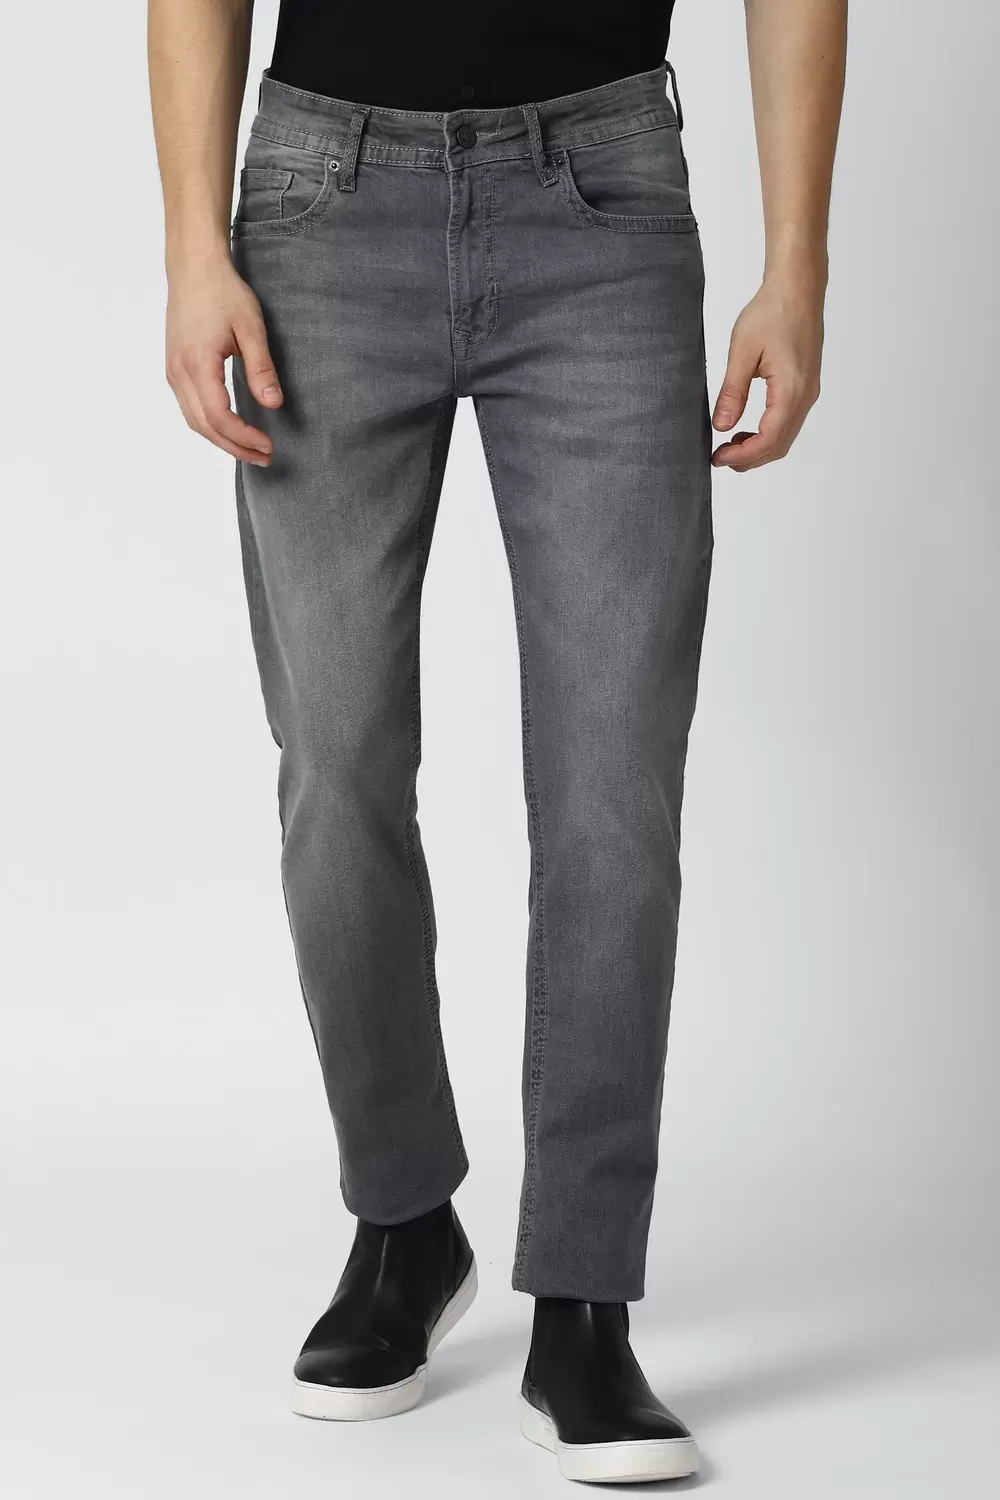 Peter England Men Grey Mid Wash Slim trendy Tapered Jeans